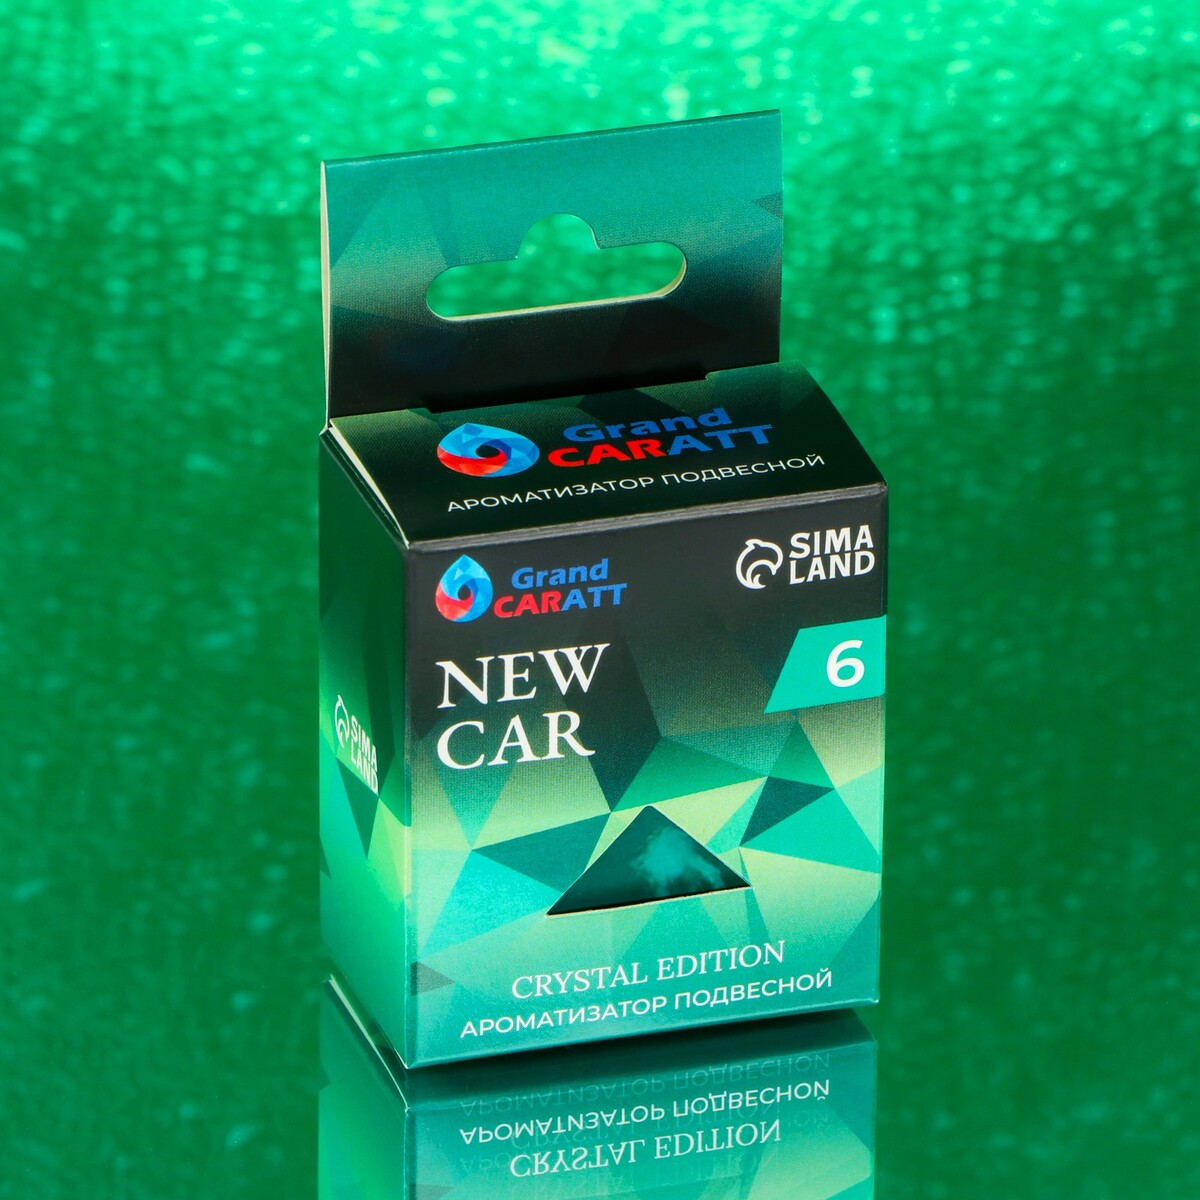 Ароматизатор подвесной grand caratt crystal edition, new car, 7 мл andrew bick bilingual edition